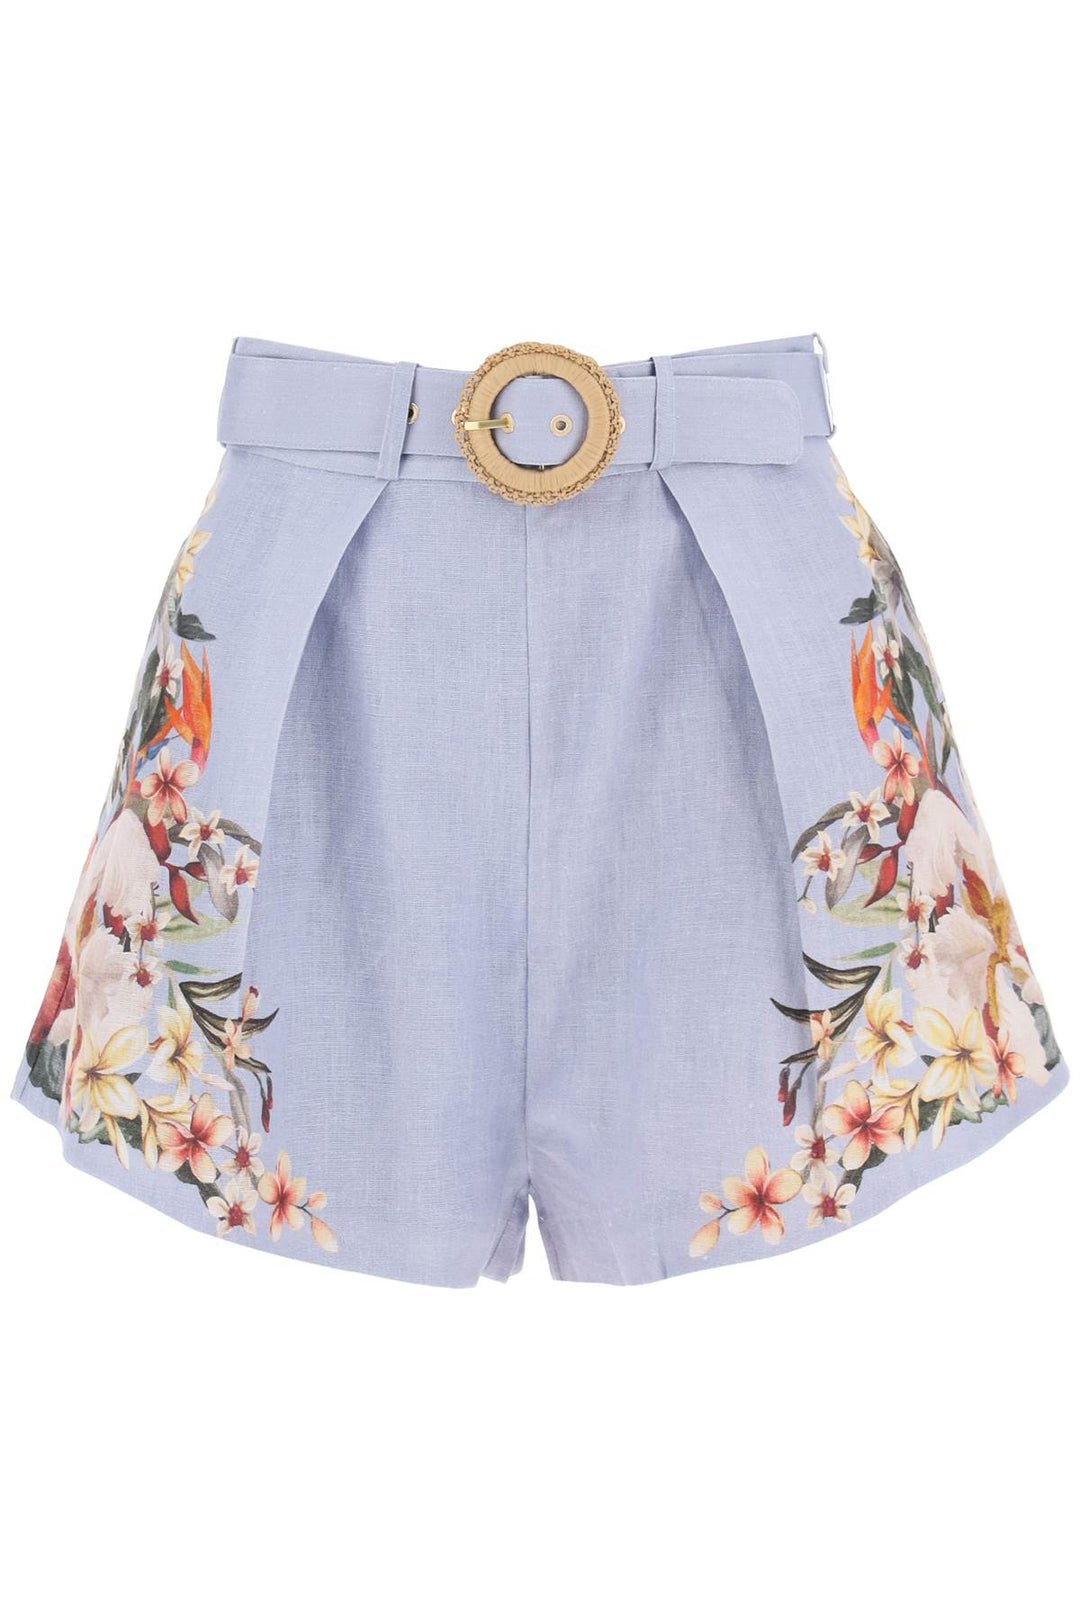 Zimmermann Lexi Tuck Linen Shorts With Floral Motif   Celeste